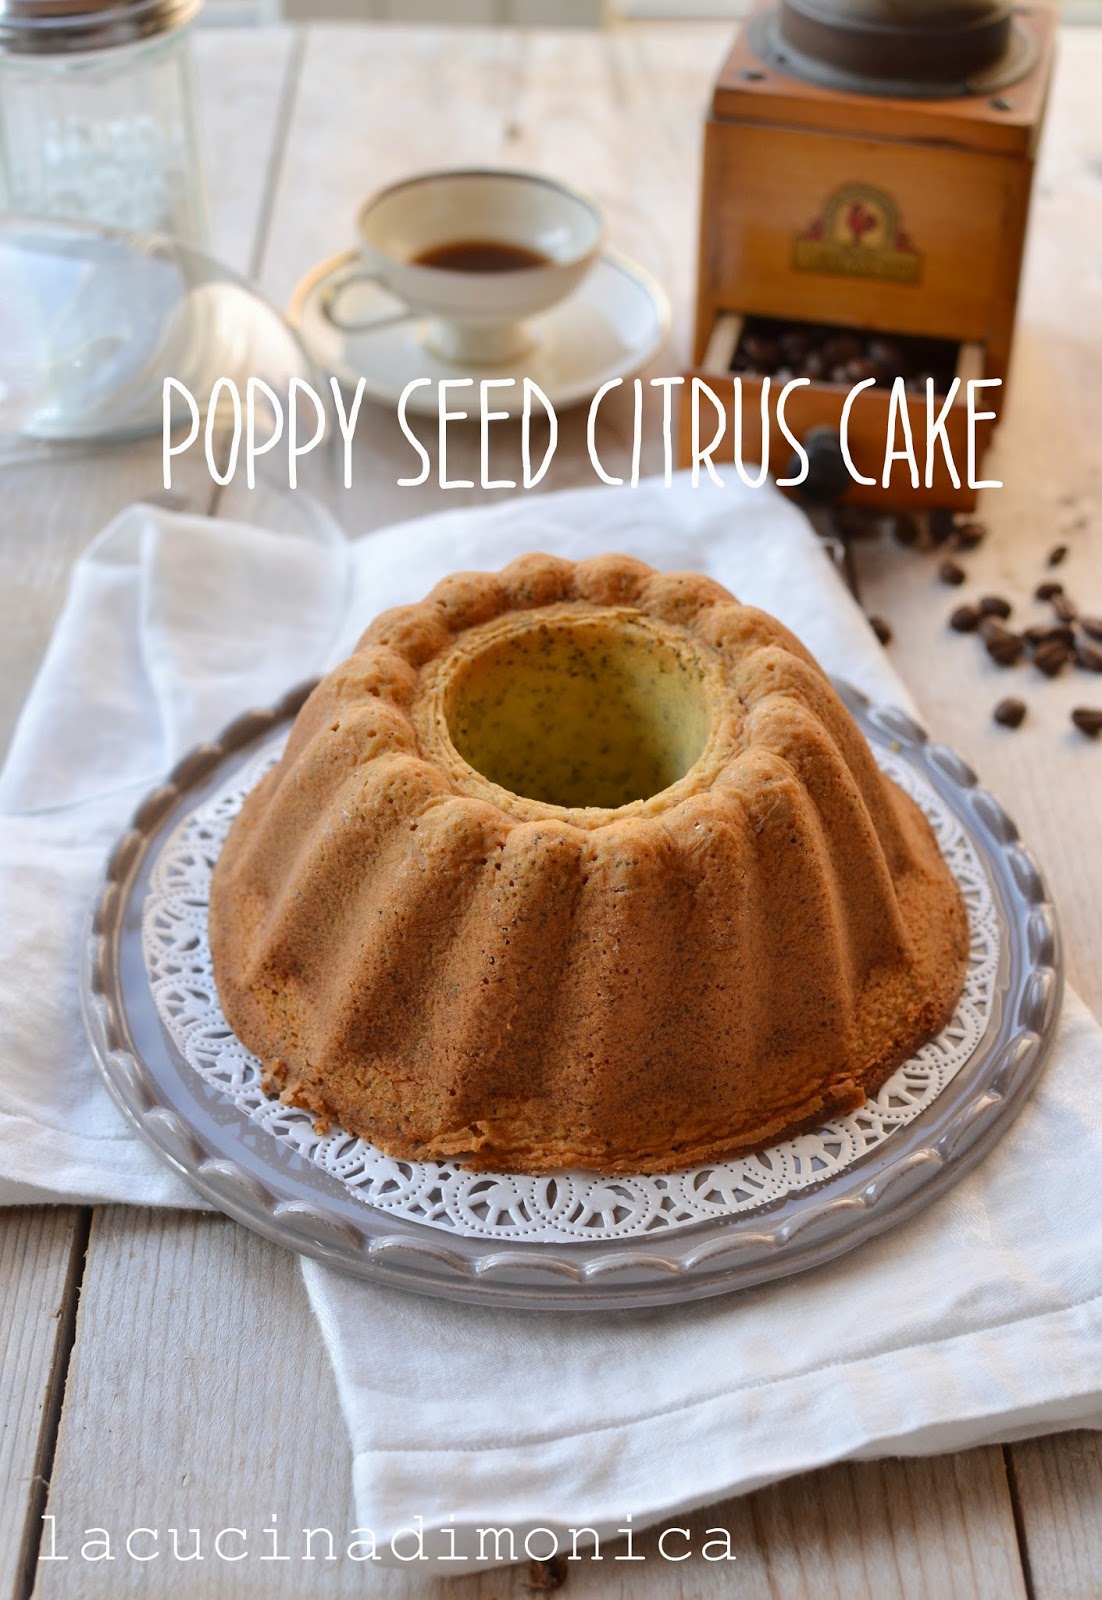 poppy seed citrus cake